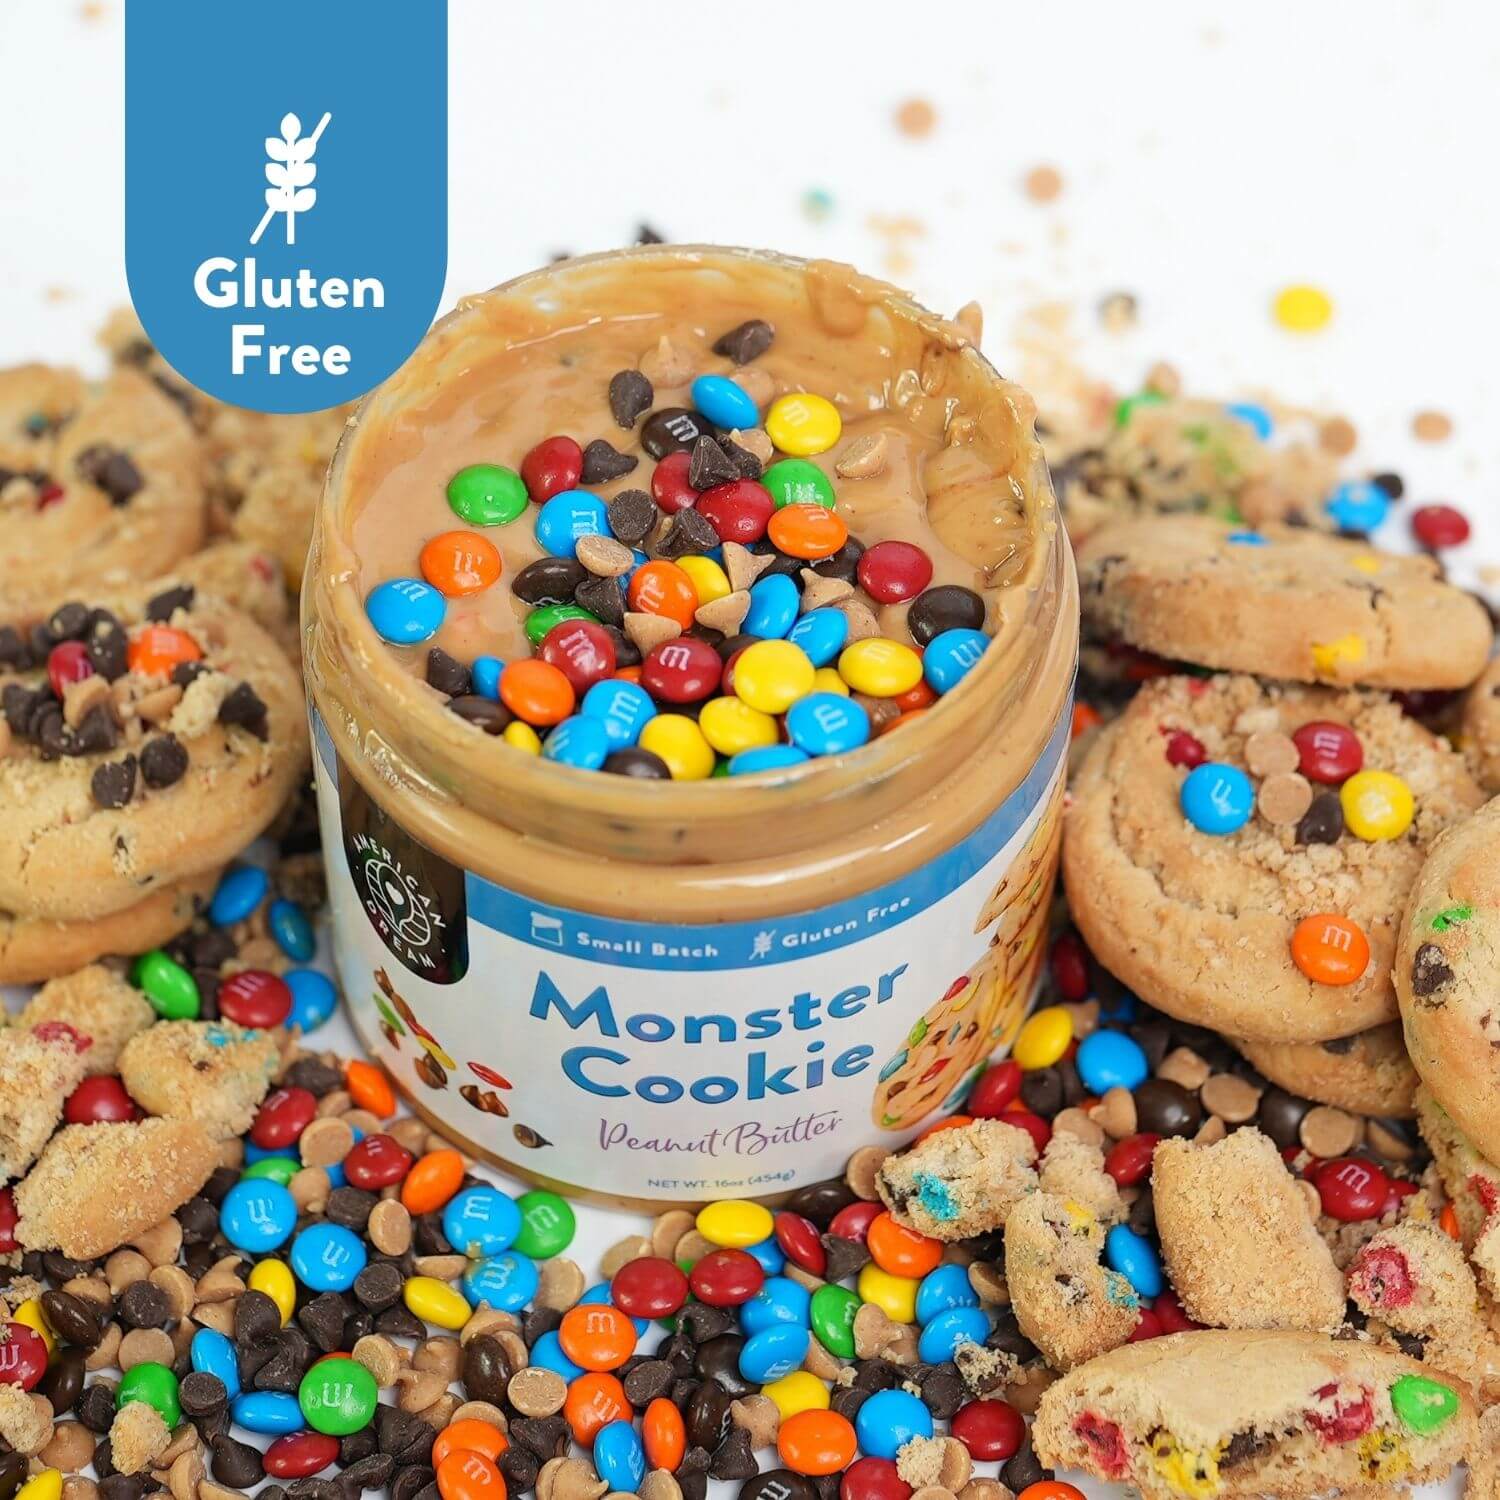 Gluten-Free Monster Cookie Peanut Butter – American Dream Nut Butter